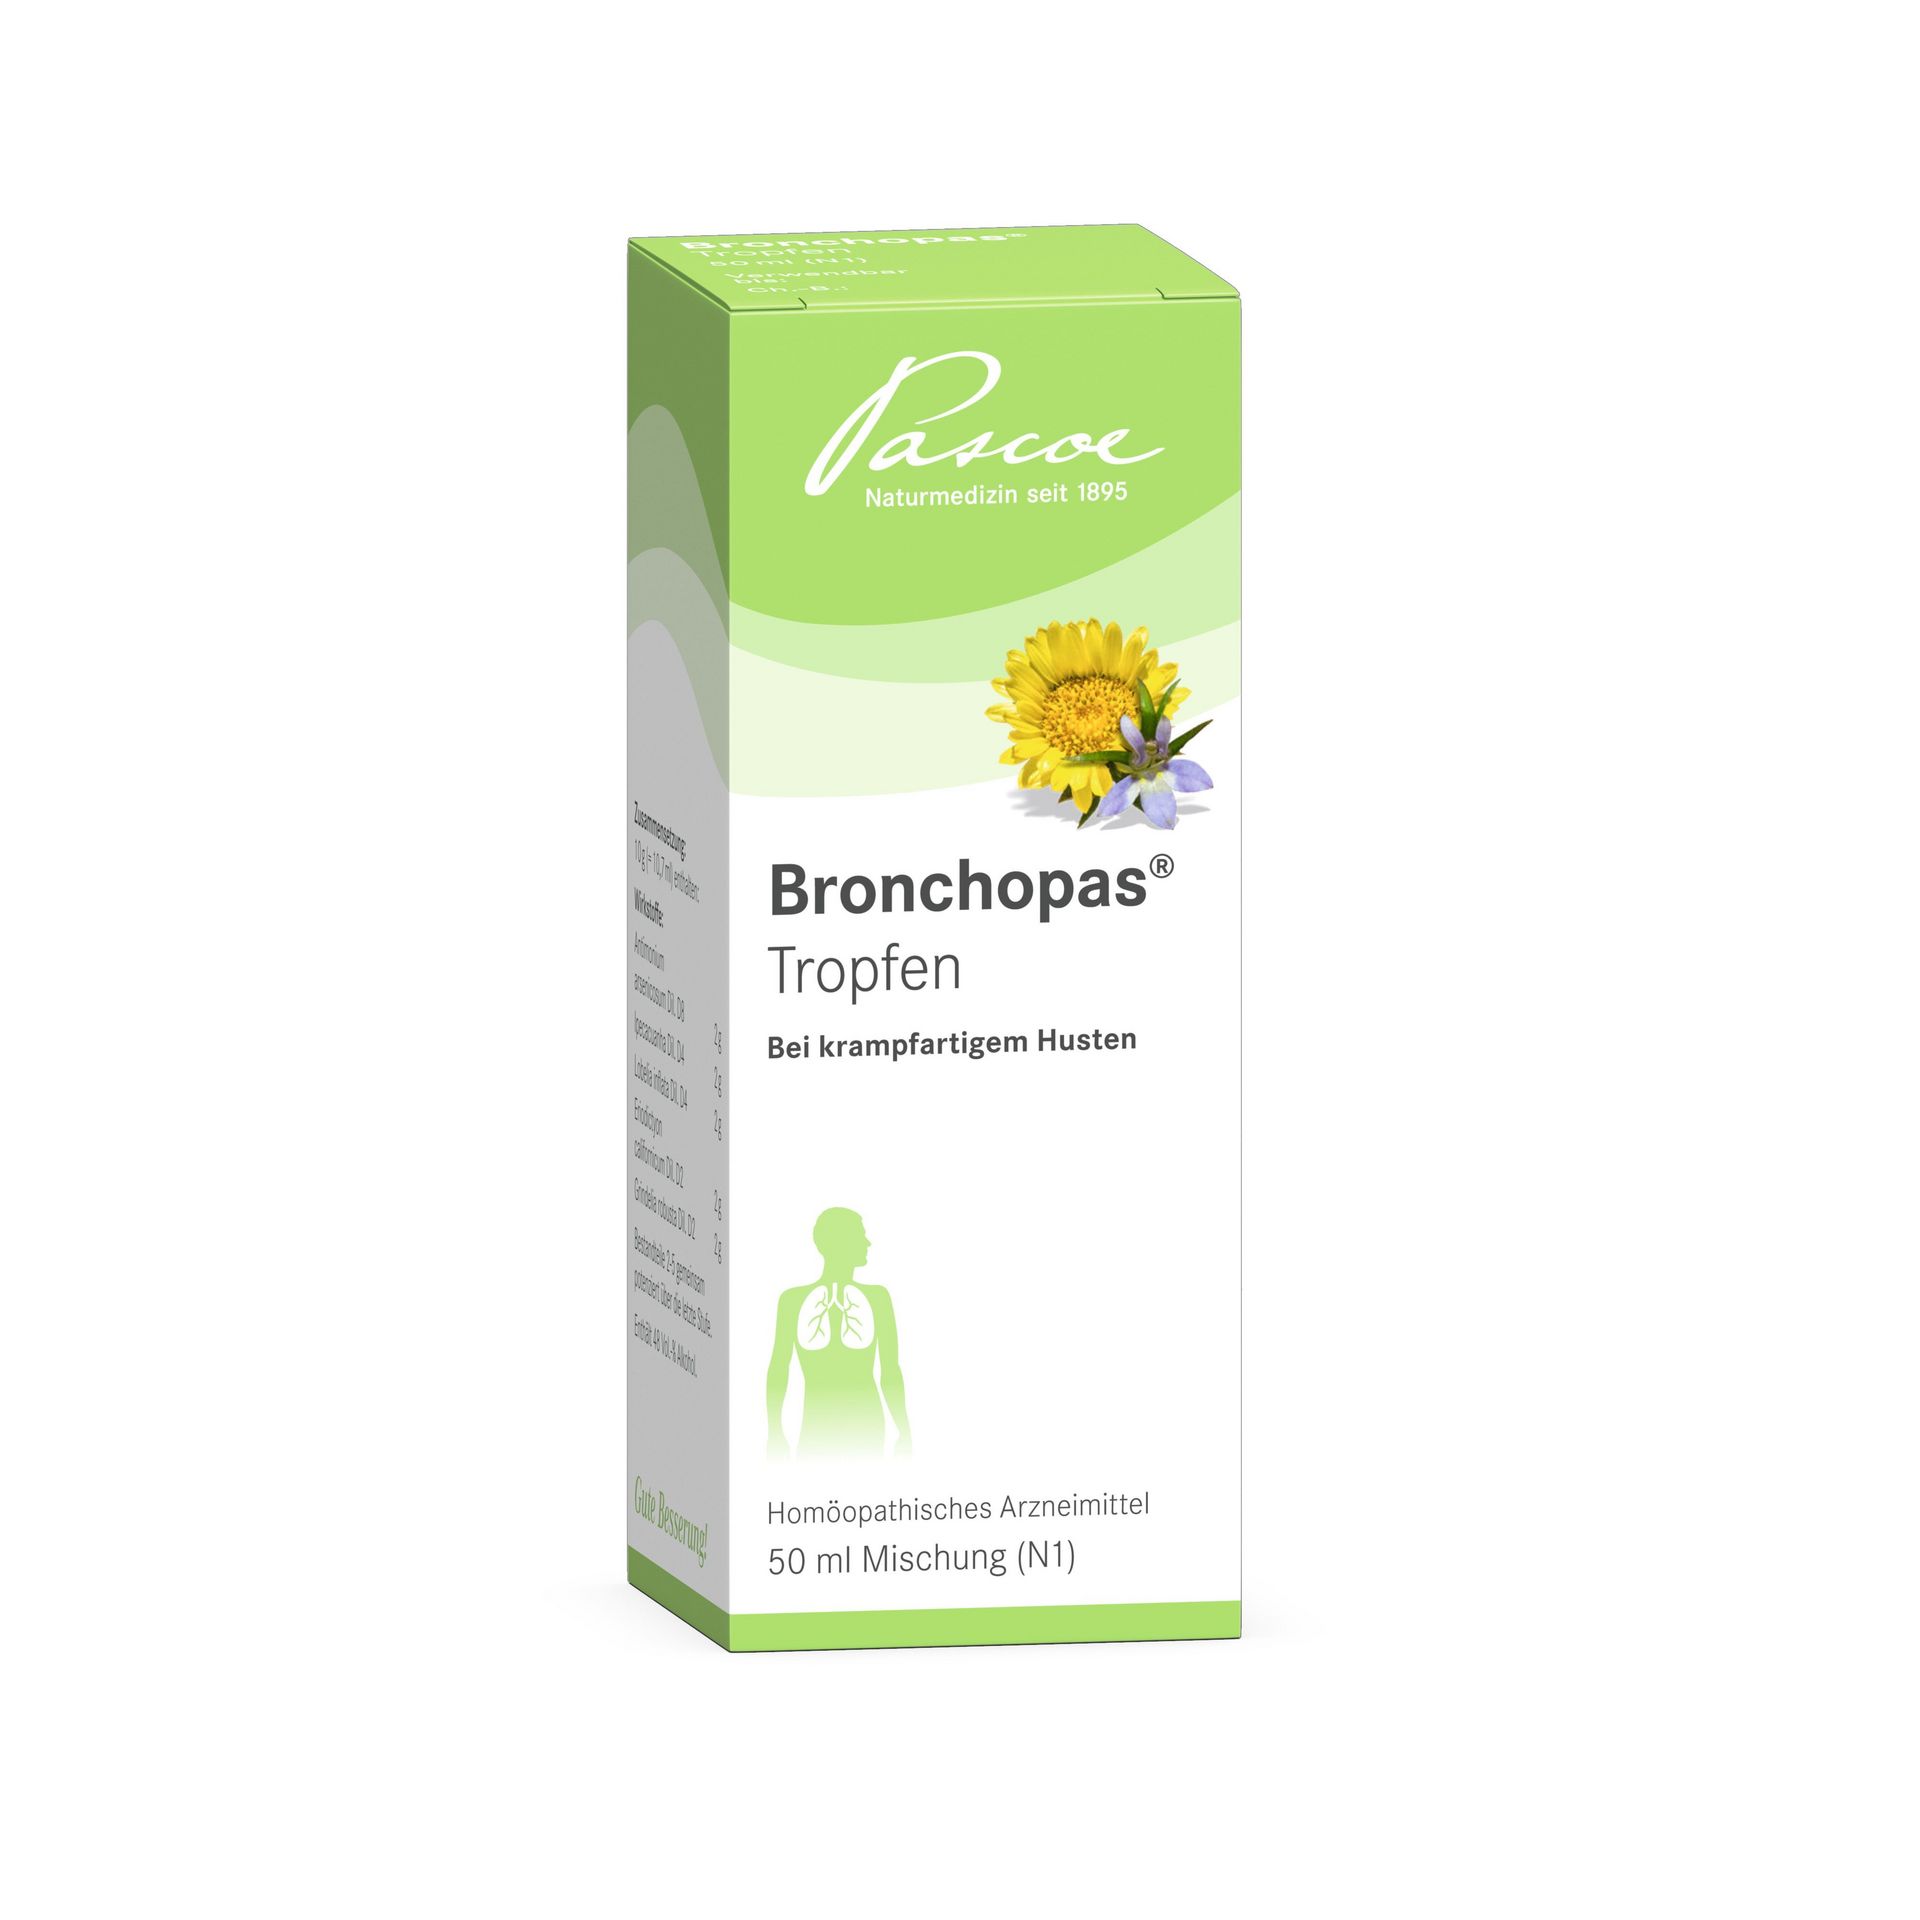 Bronchopas 50 ml Packshot PZN 00985119